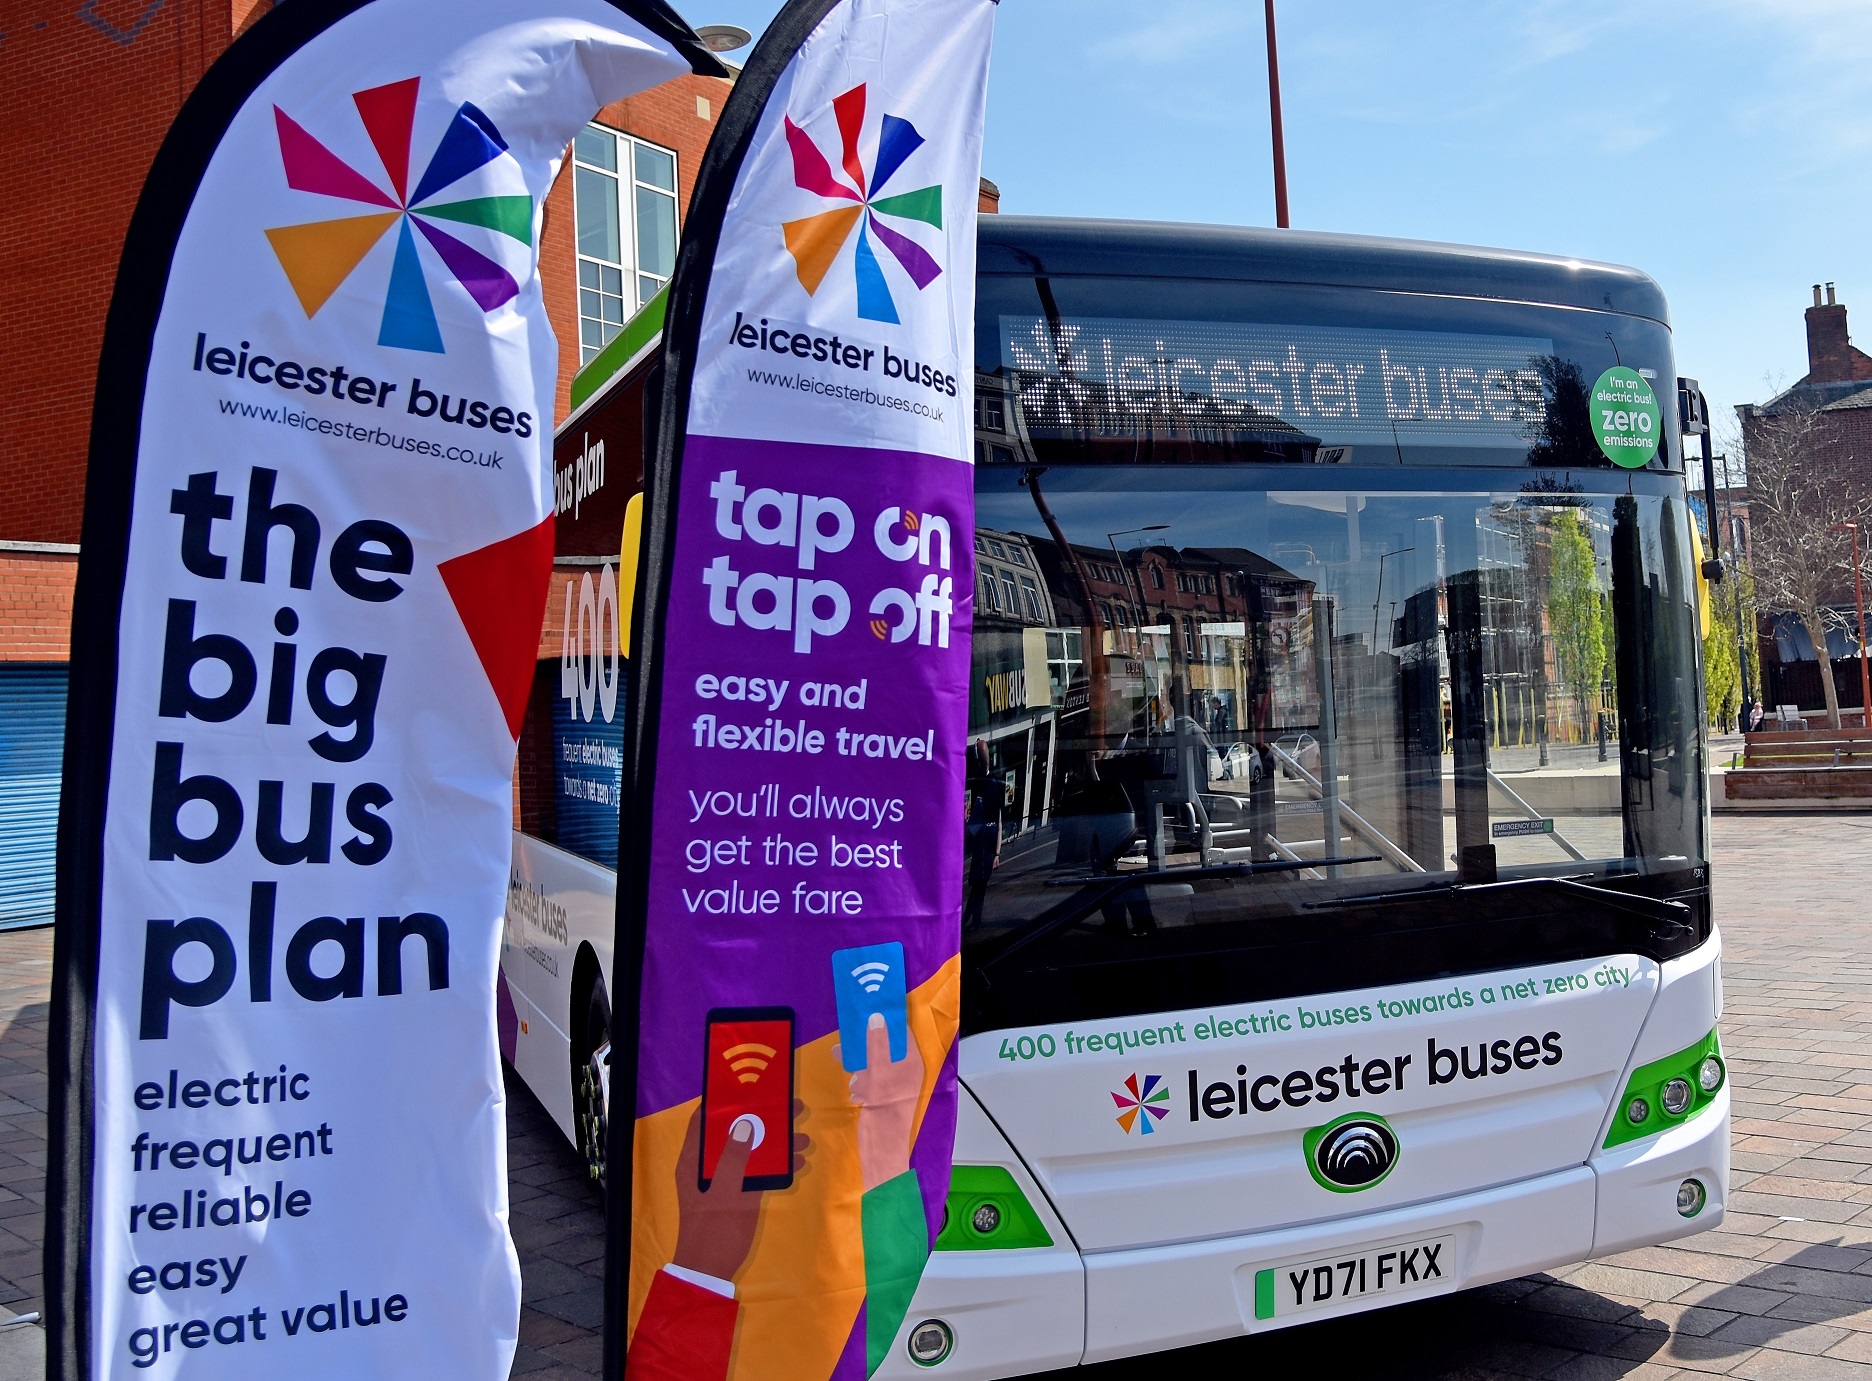 Multi operator bus fare capping in Leicester